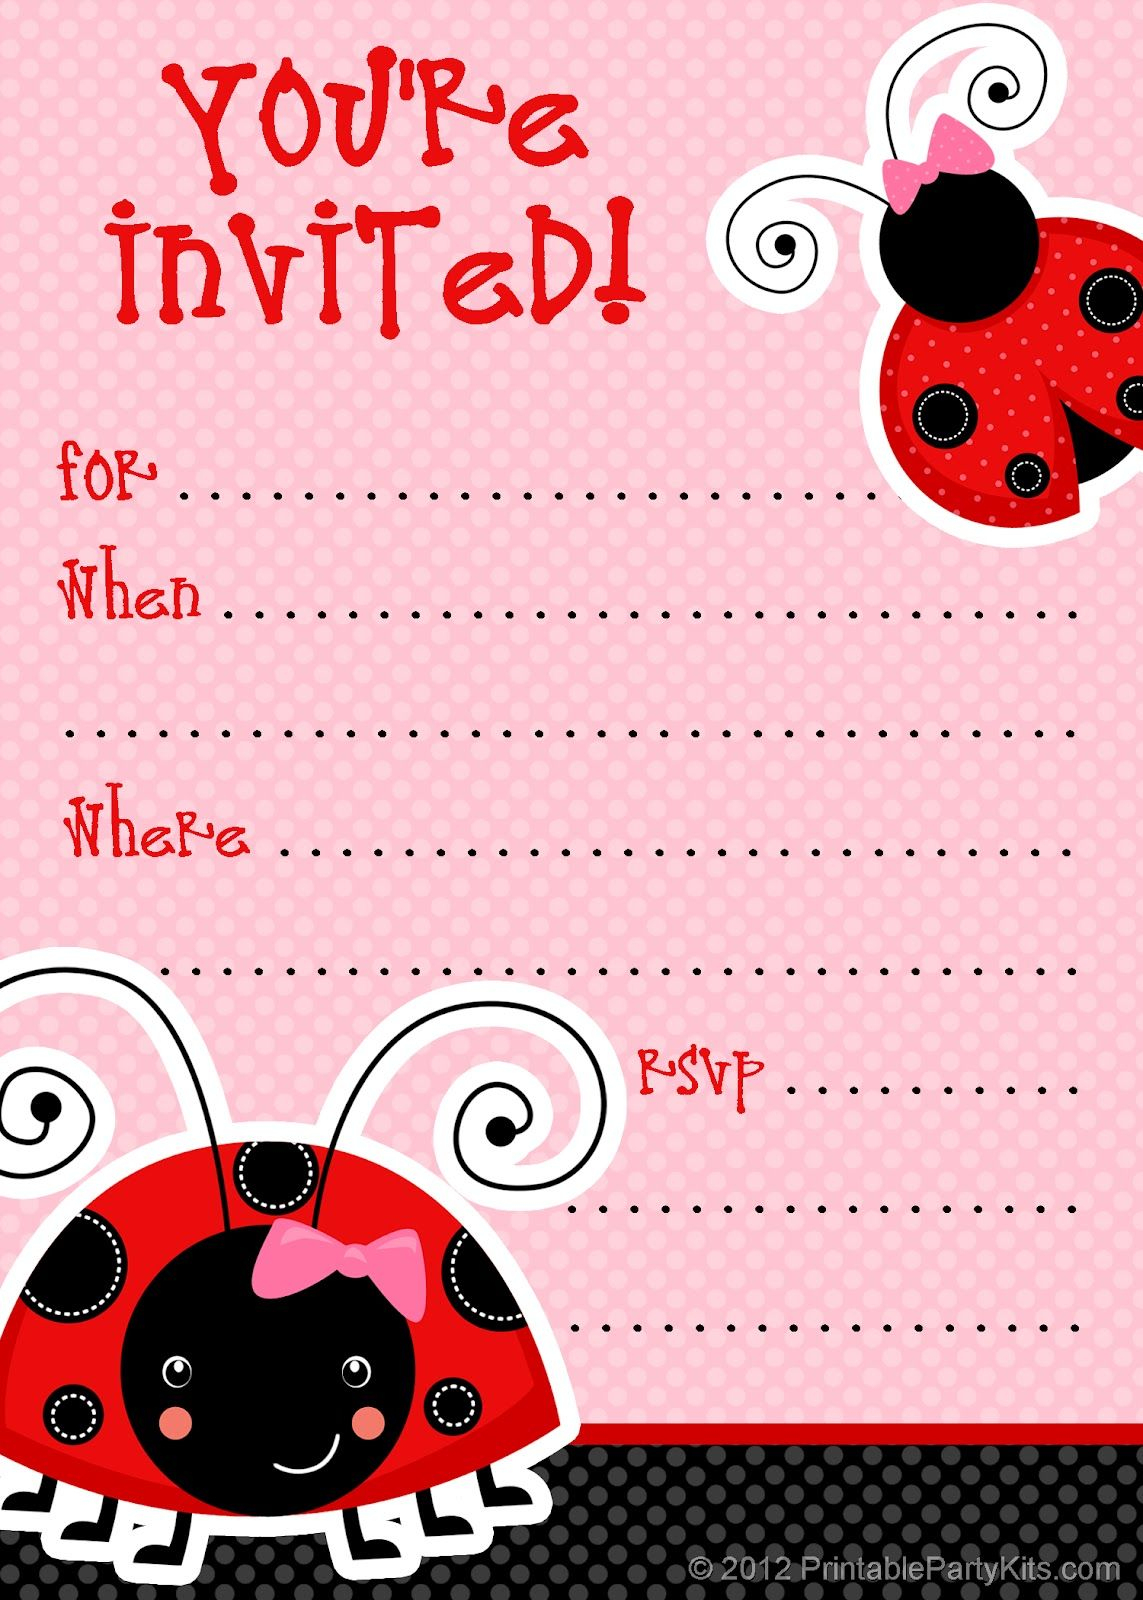 Free Printable Party Invitations: Free Ladybug Invite Template - Free Printable Ladybug Baby Shower Invitations Templates